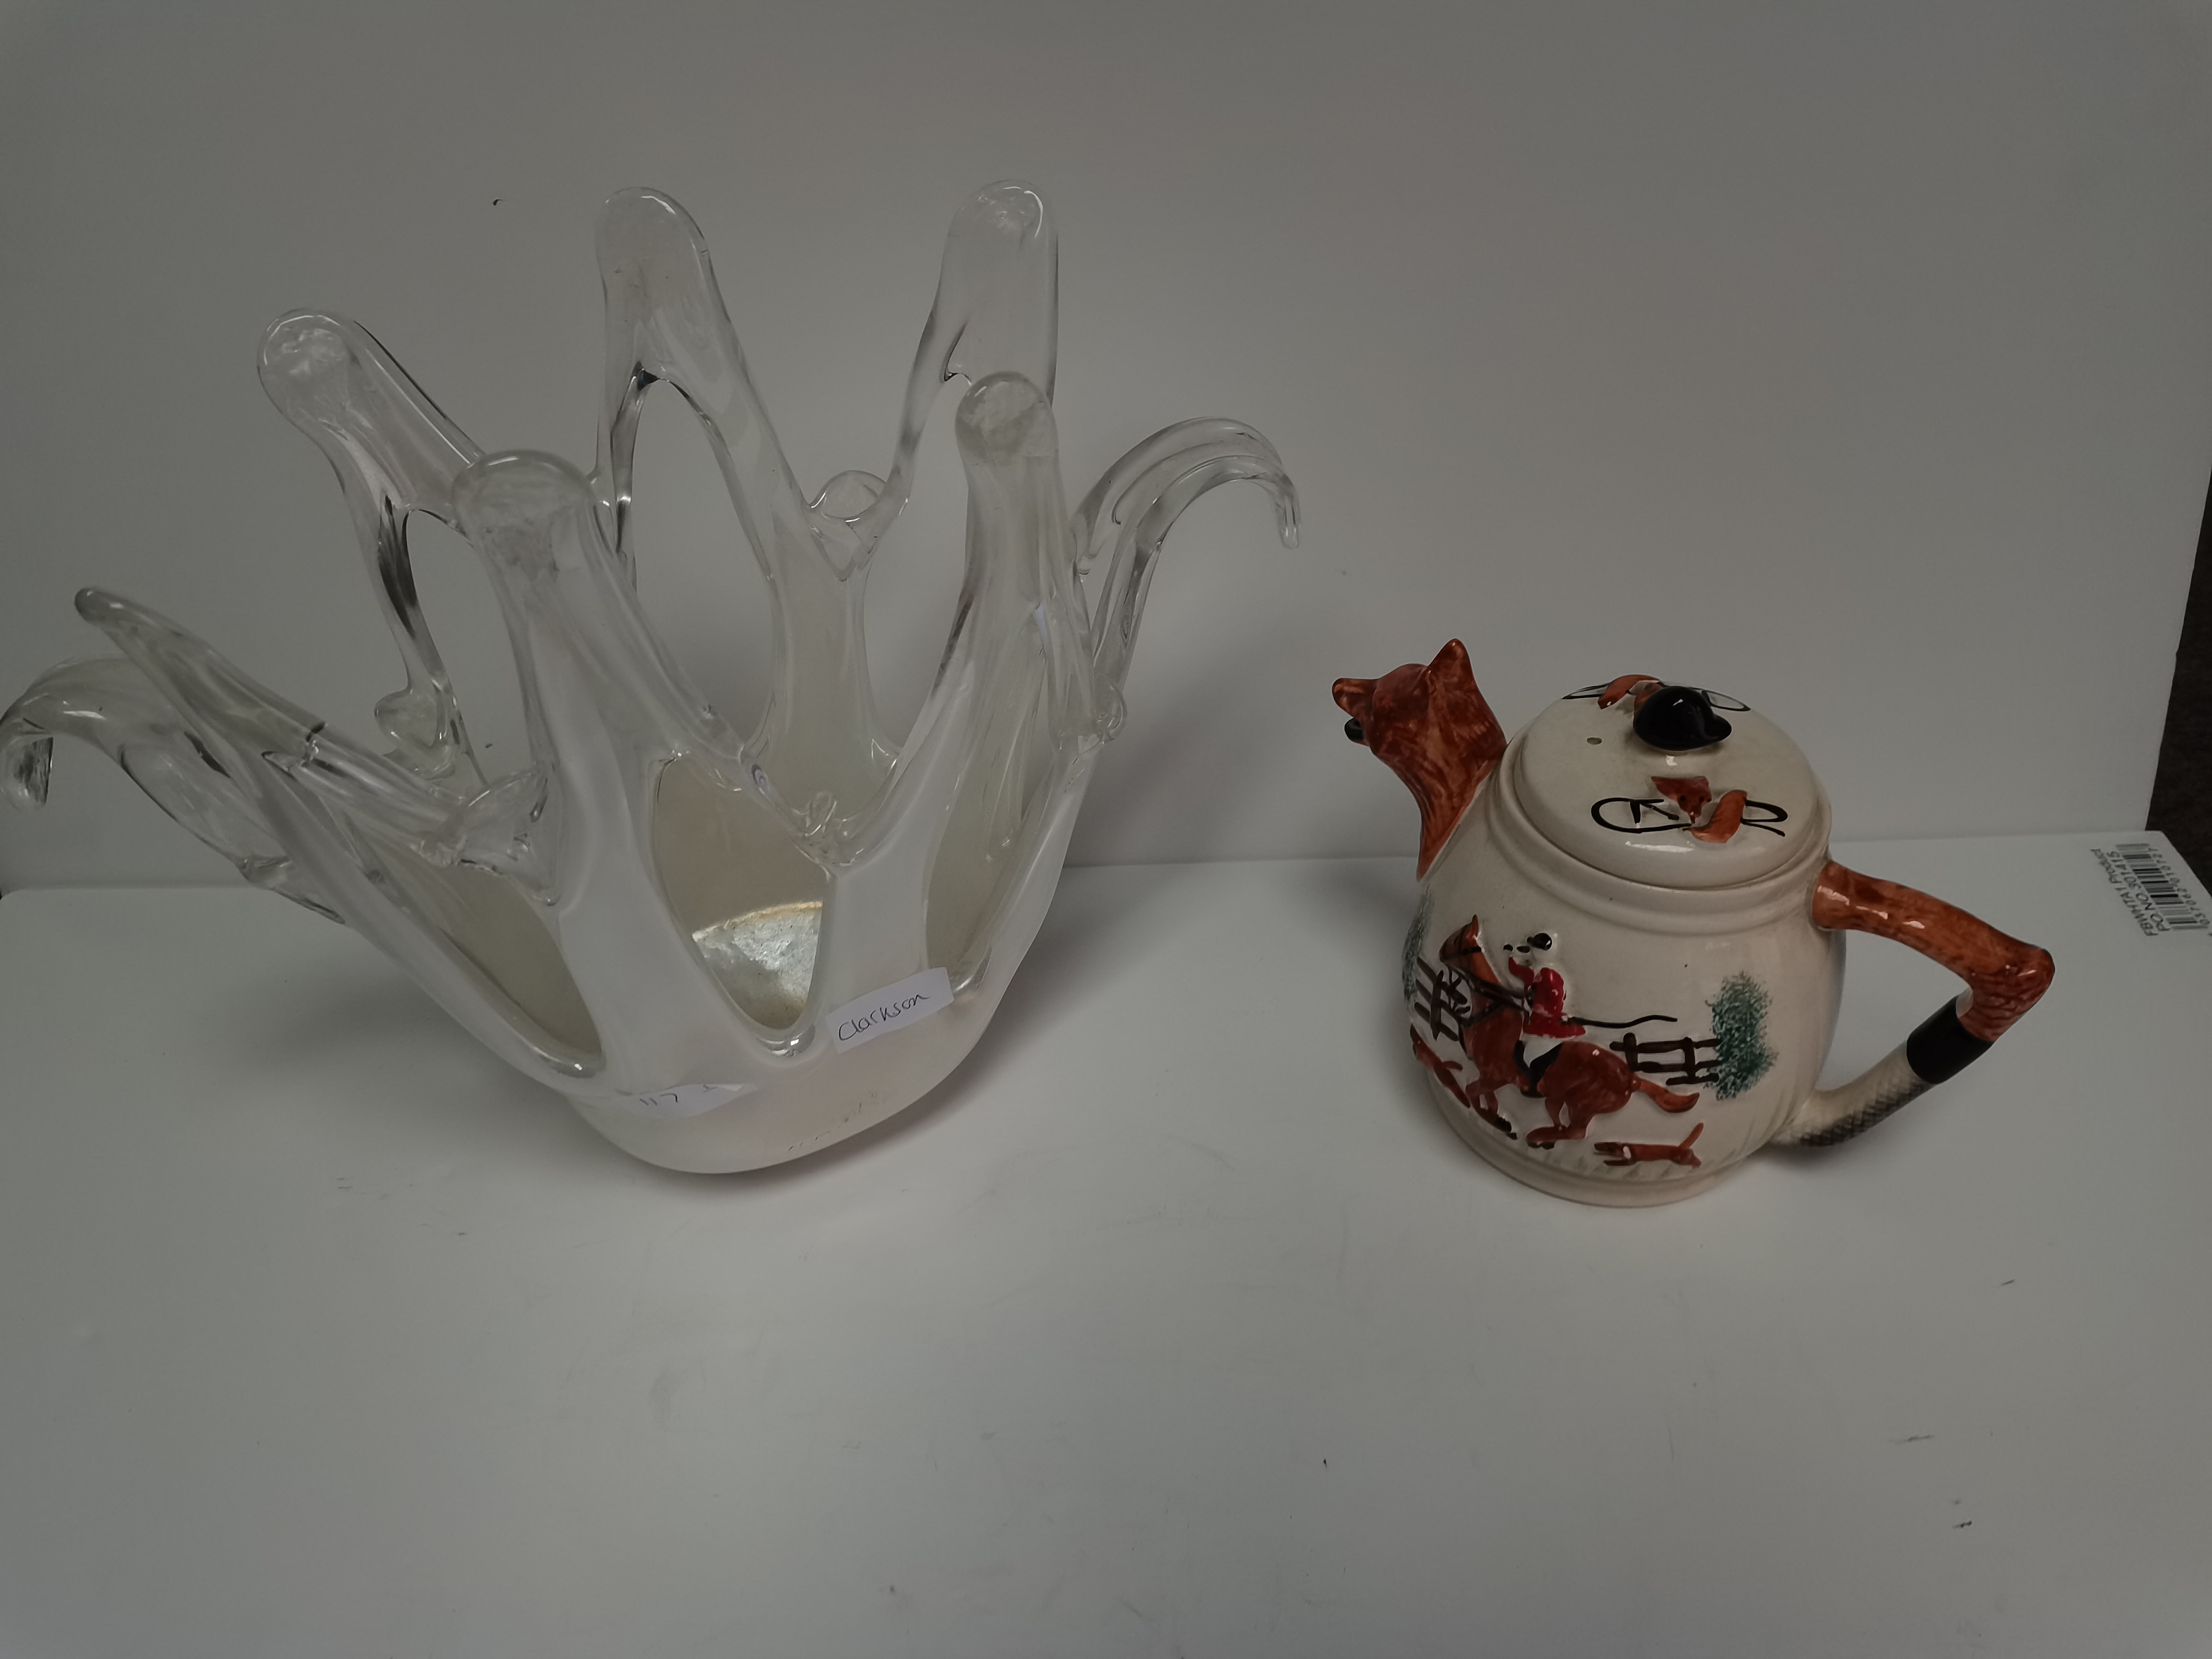 Beswick Hunstman teapot and studio glass piece